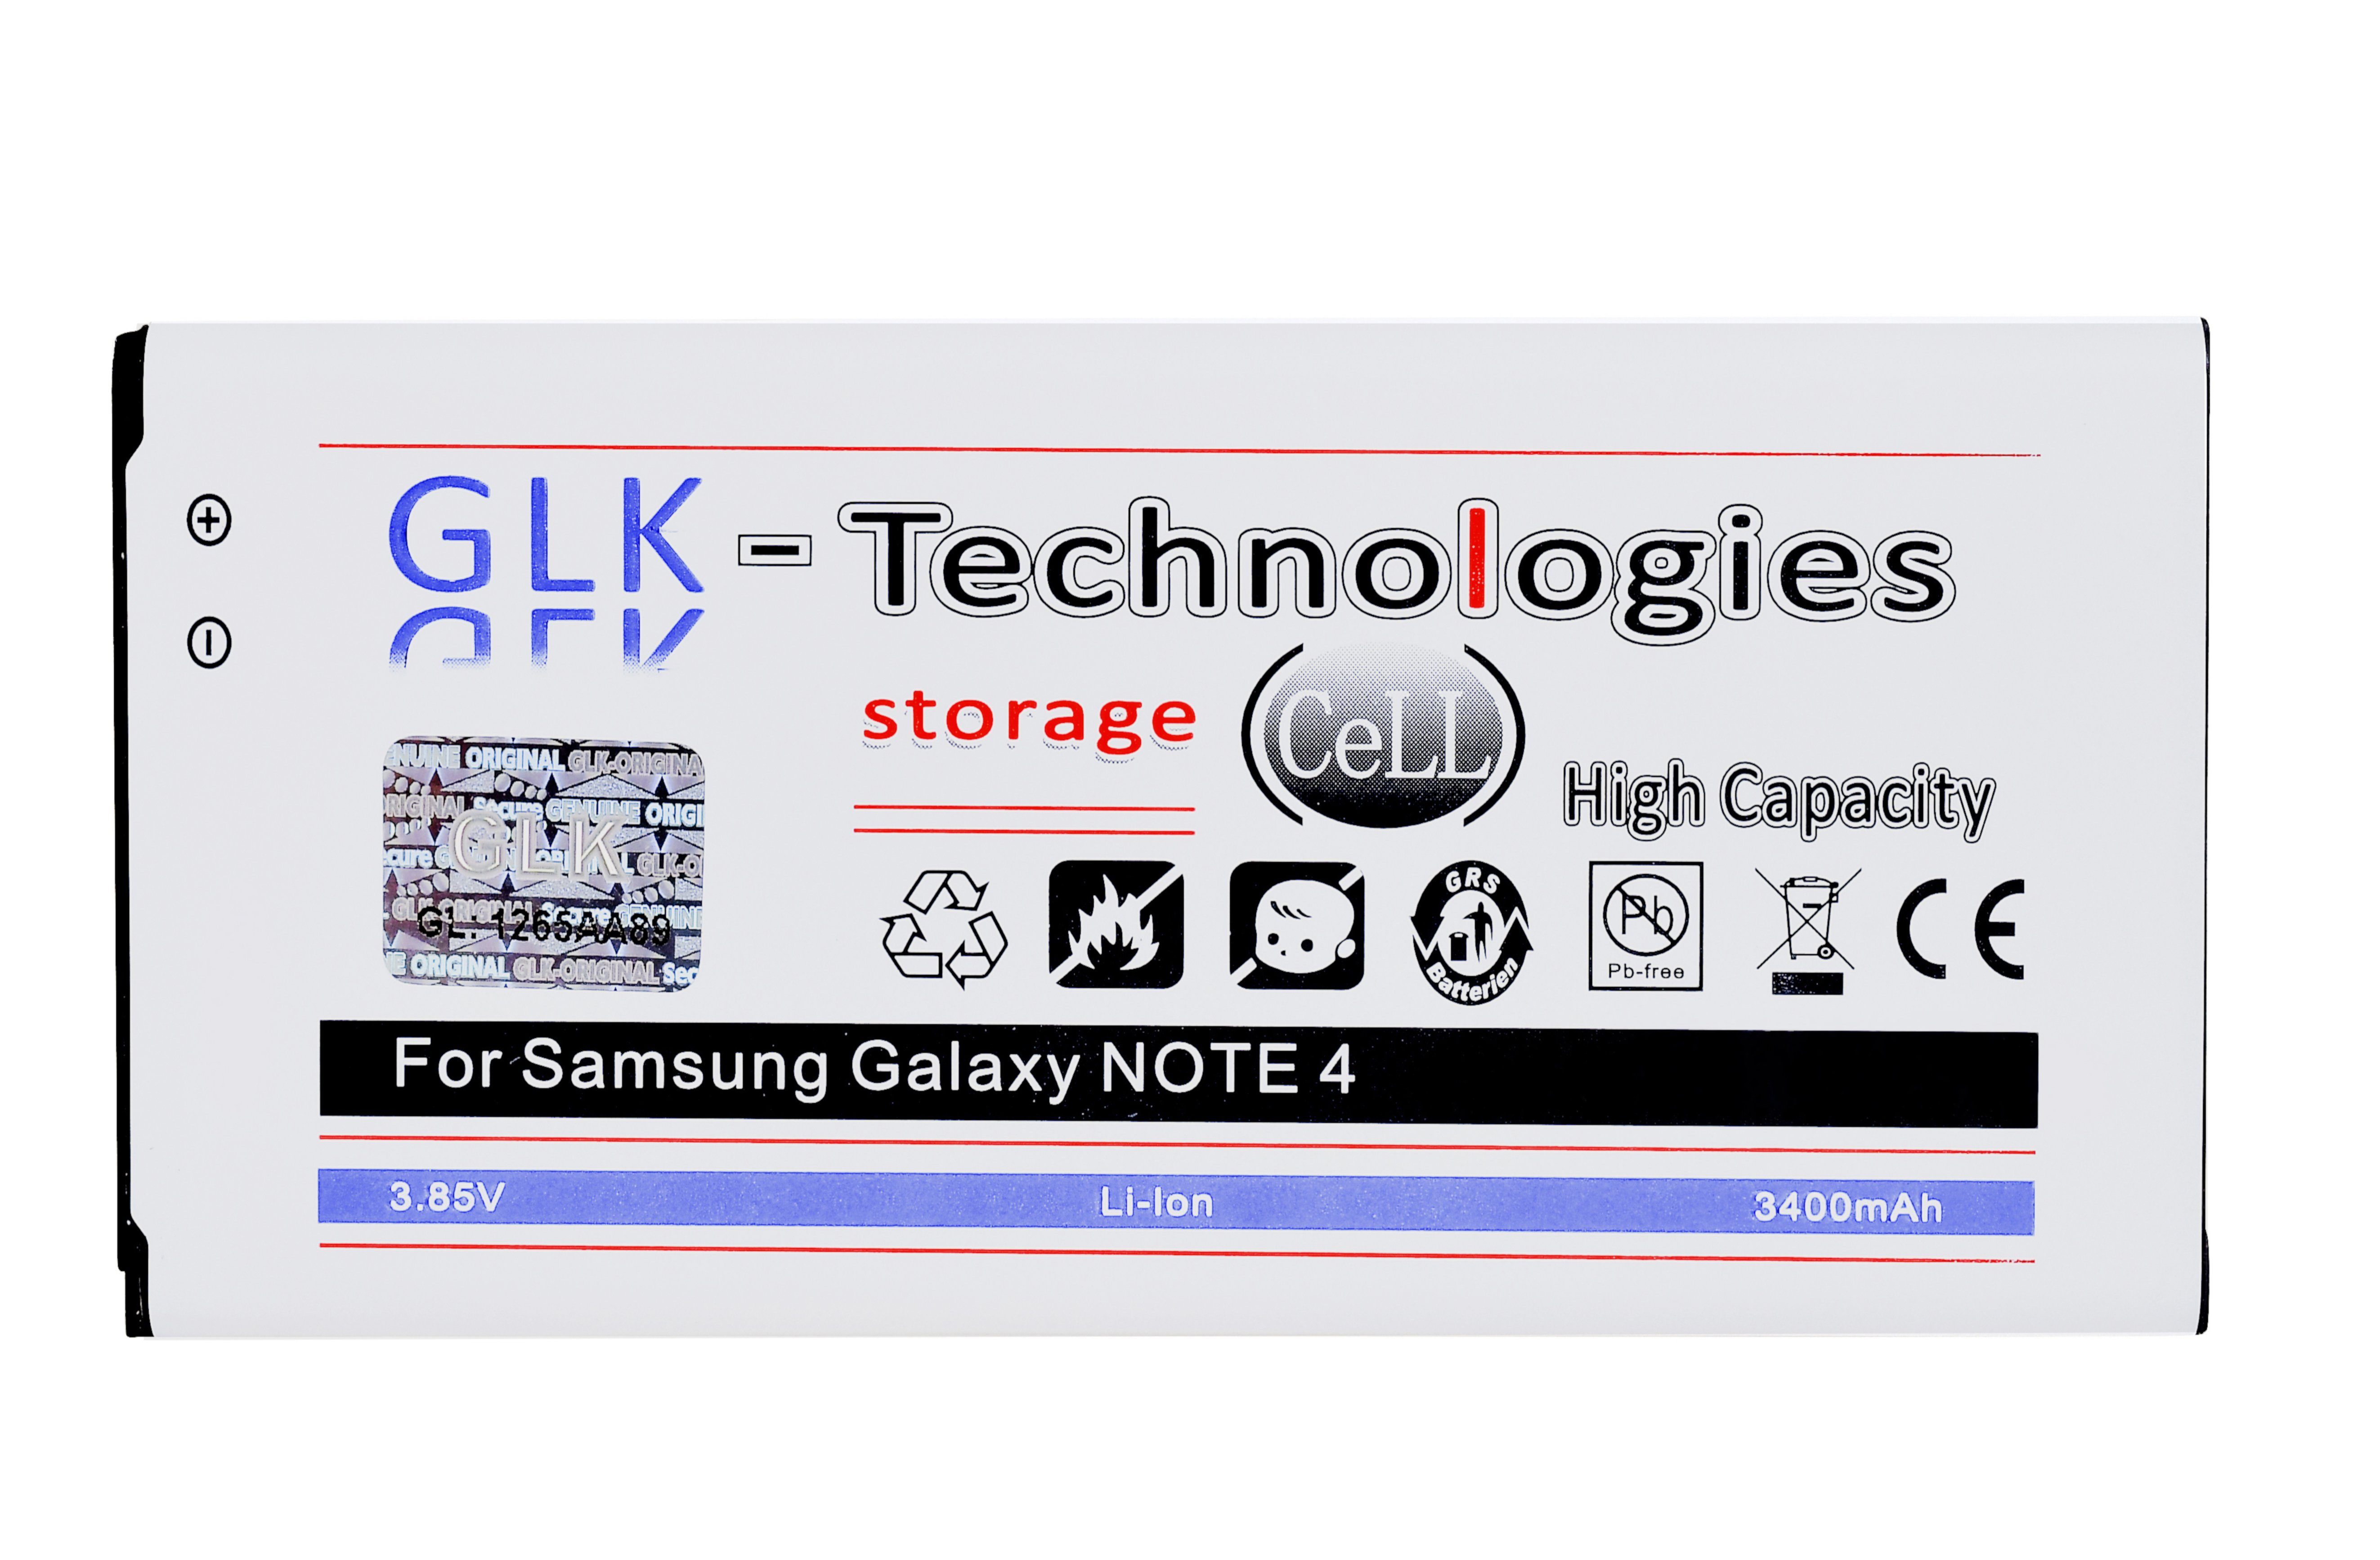 3400 GLK-Technologies kompatibel Galaxy Power NEU mAh mAh mit (3.85 Original Samsung V) NFC, IV Note mit Smartphone-Akku Akku, High accu, 3400 Ersatzakku GLK-Technologies 4 Battery, SM-N910F